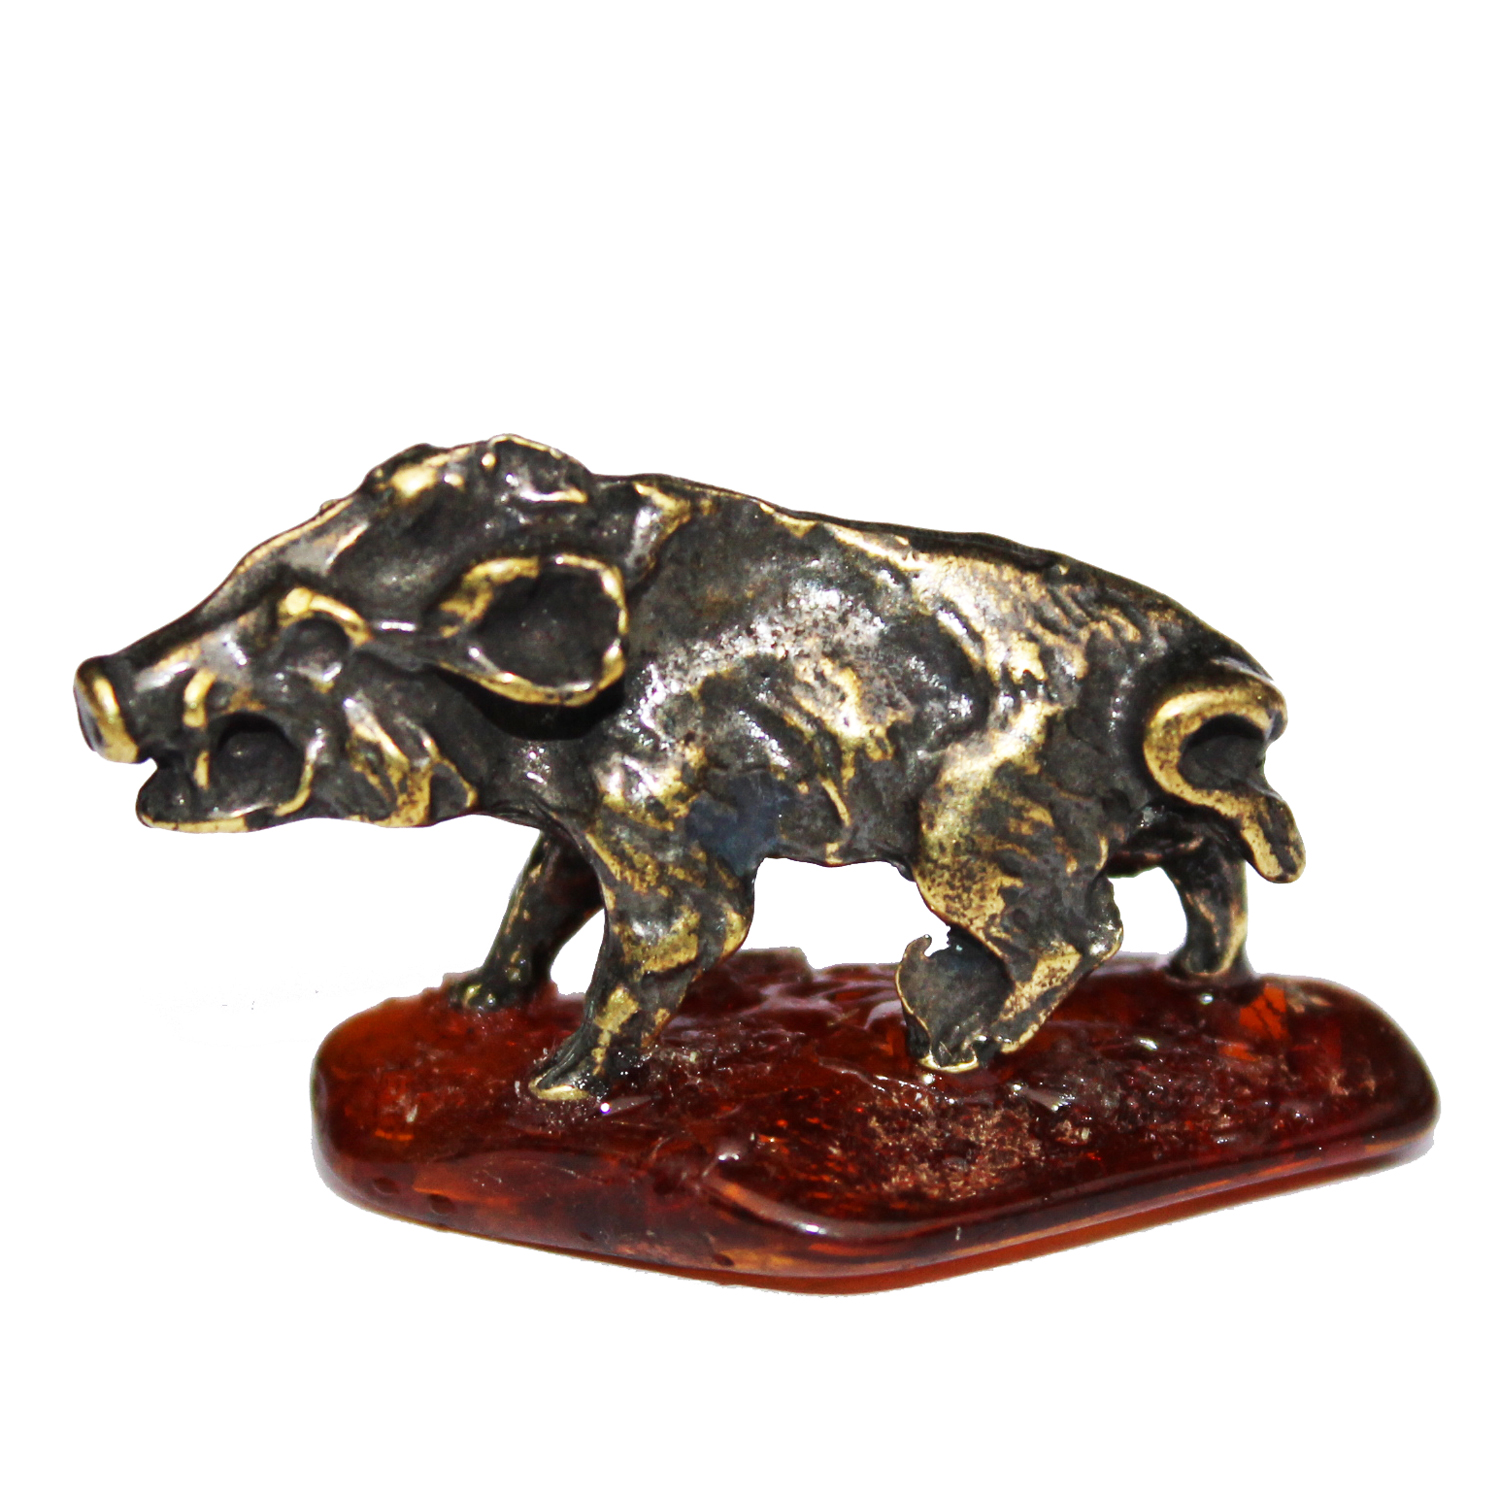 Wild Pig Ornament on Amber